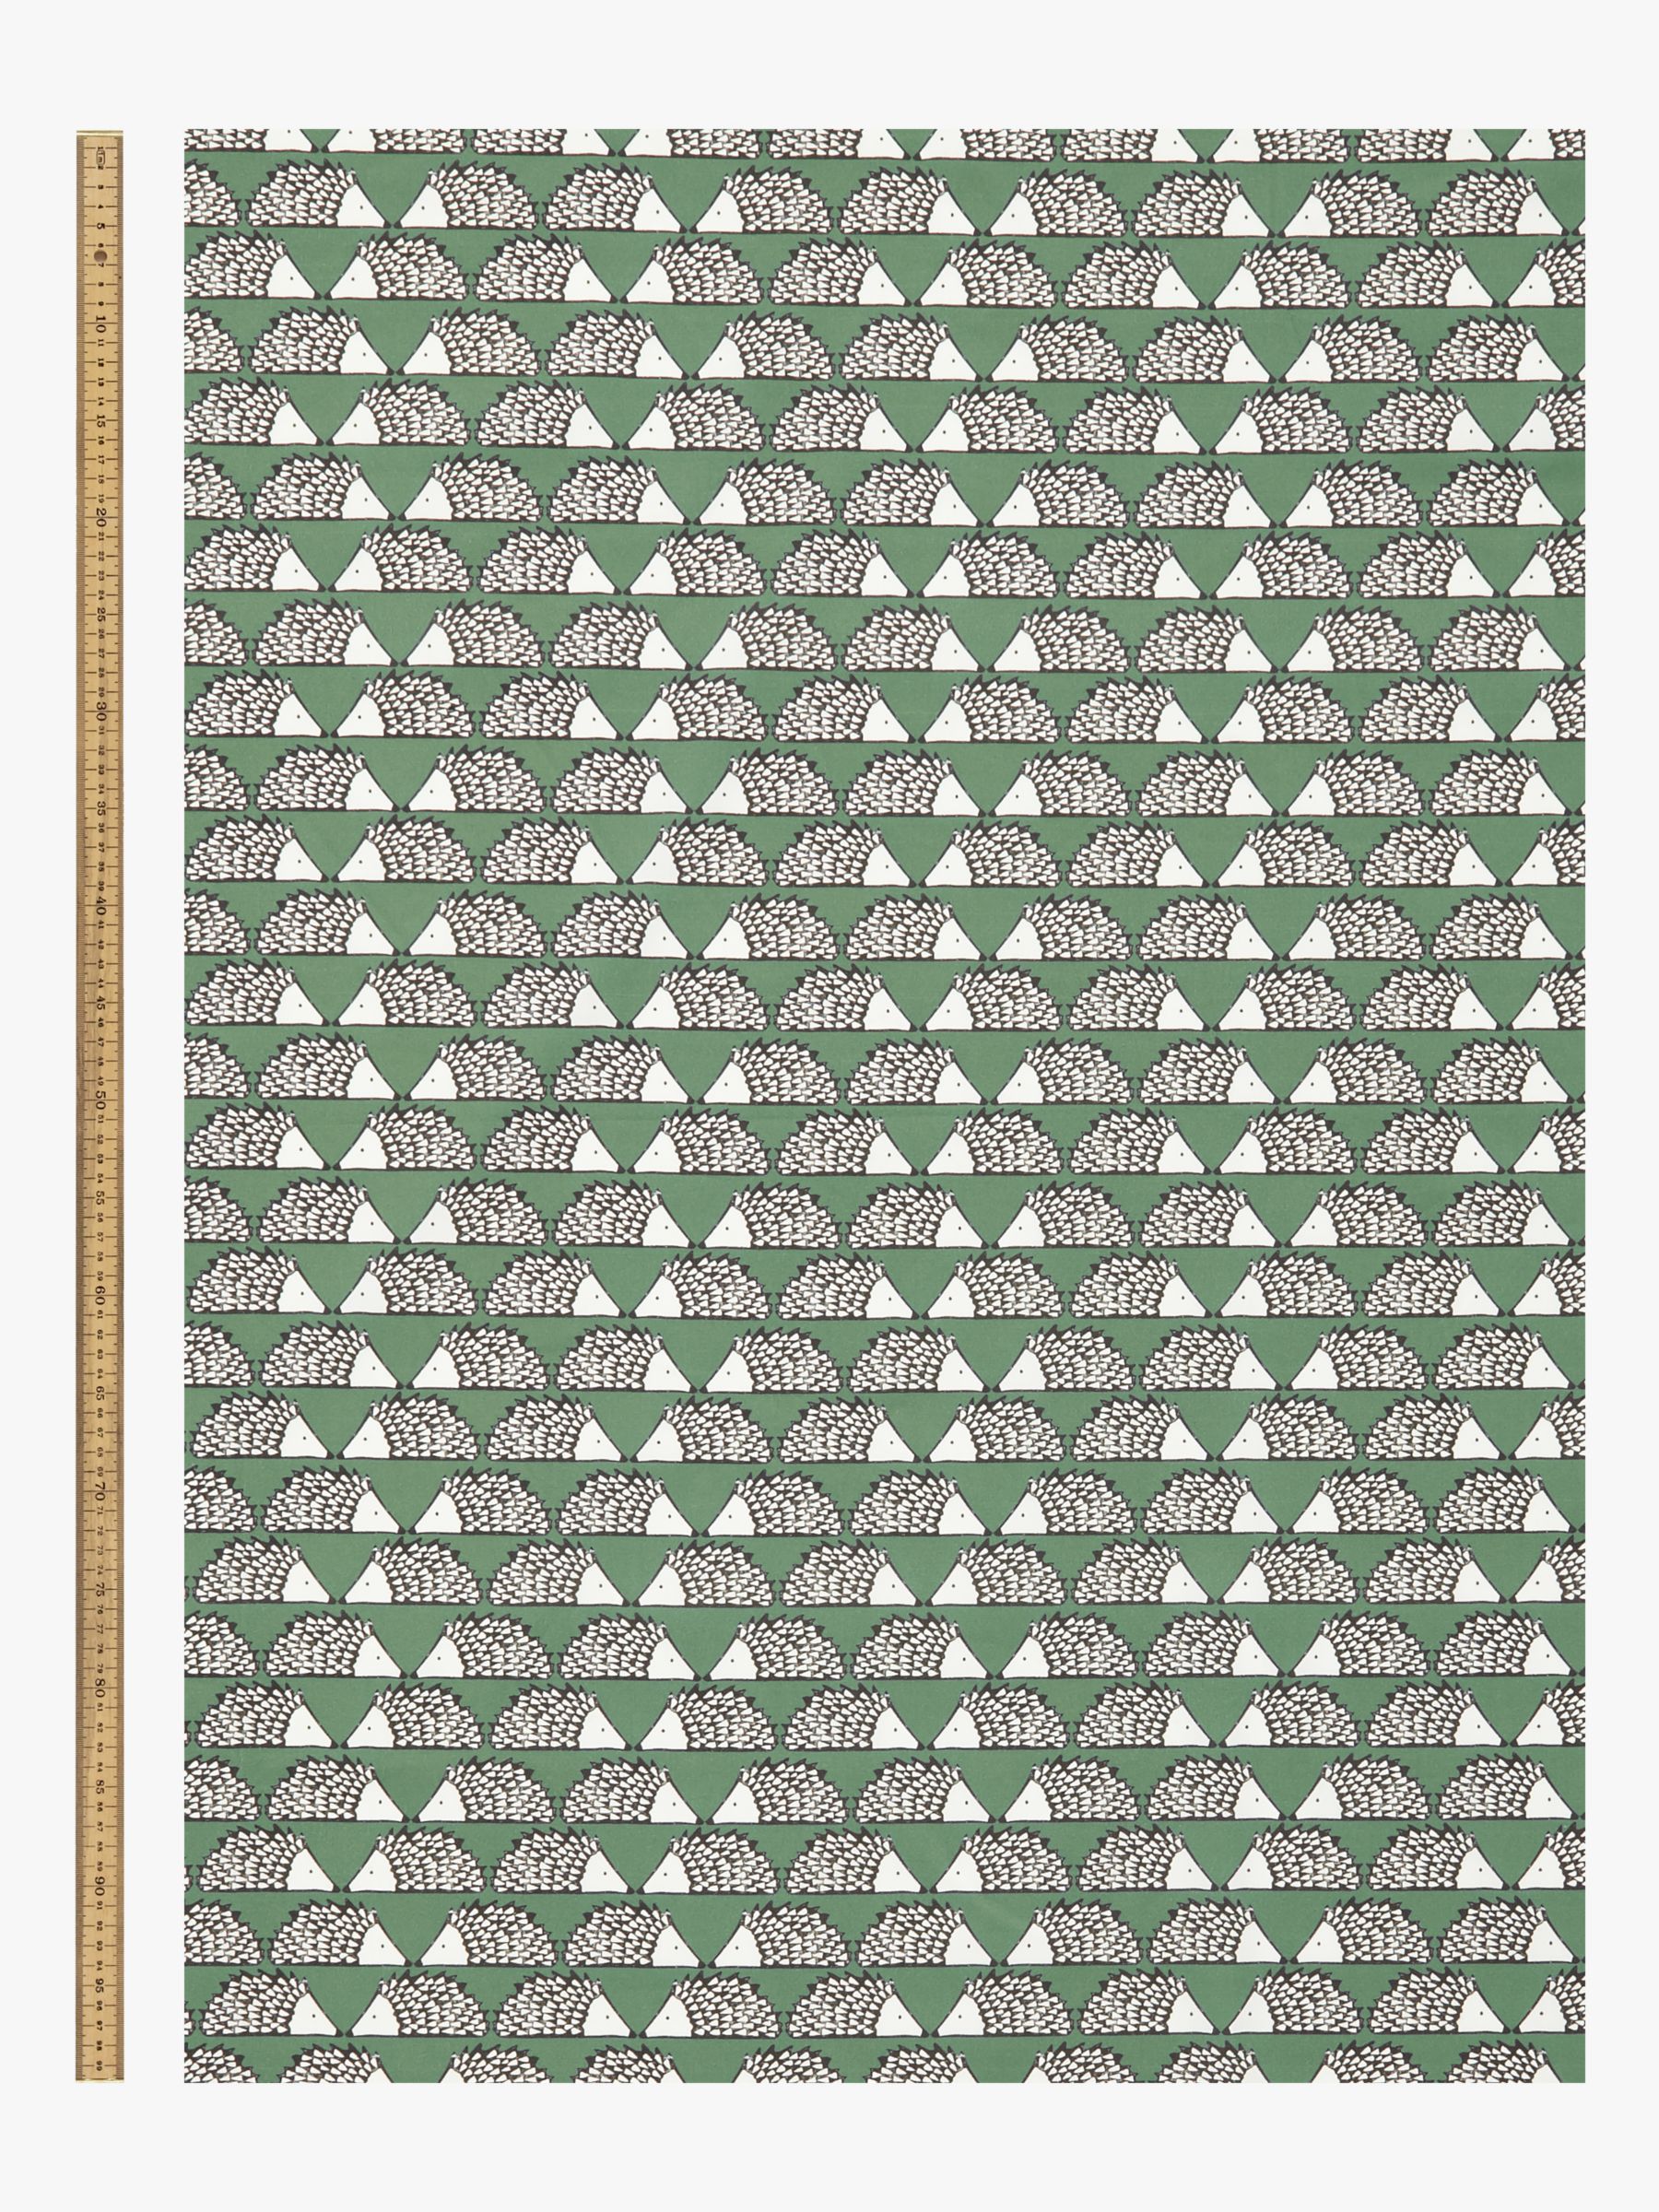 Scion Spike Hedgehog Print Fabric, Green